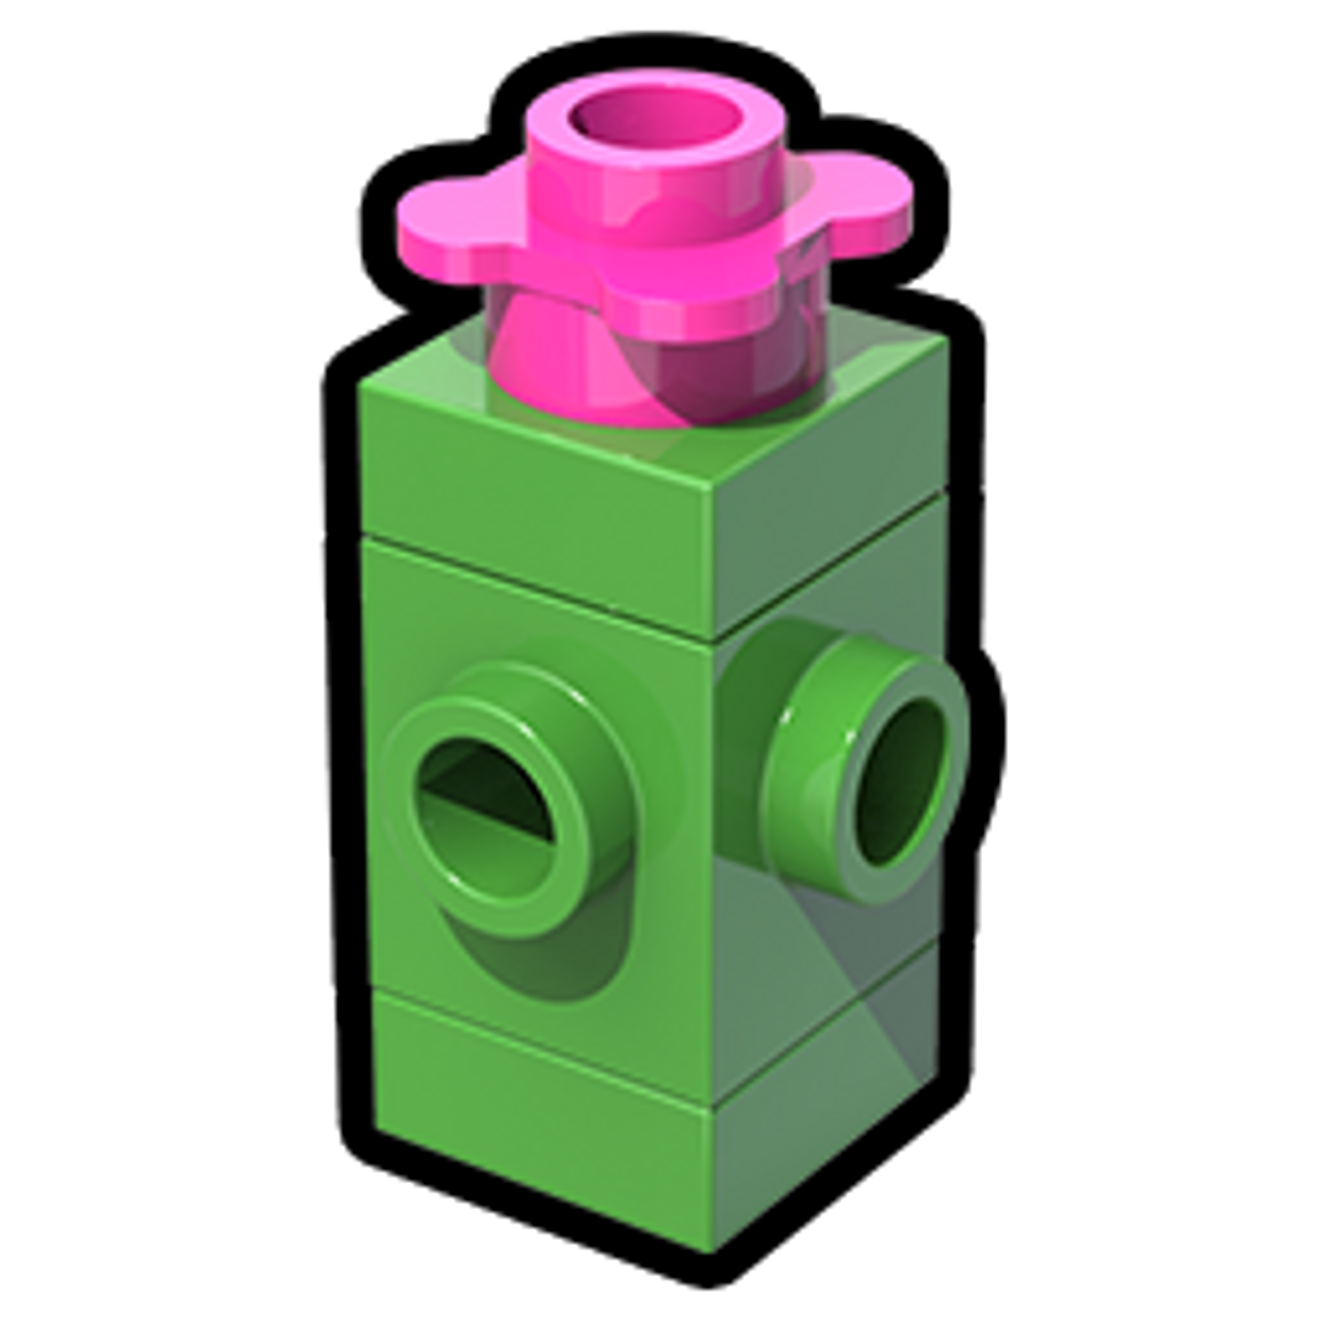 樂高 無限 新版本上線 這次要去空島體 From Lego Cube Taptap Lego Cube Community